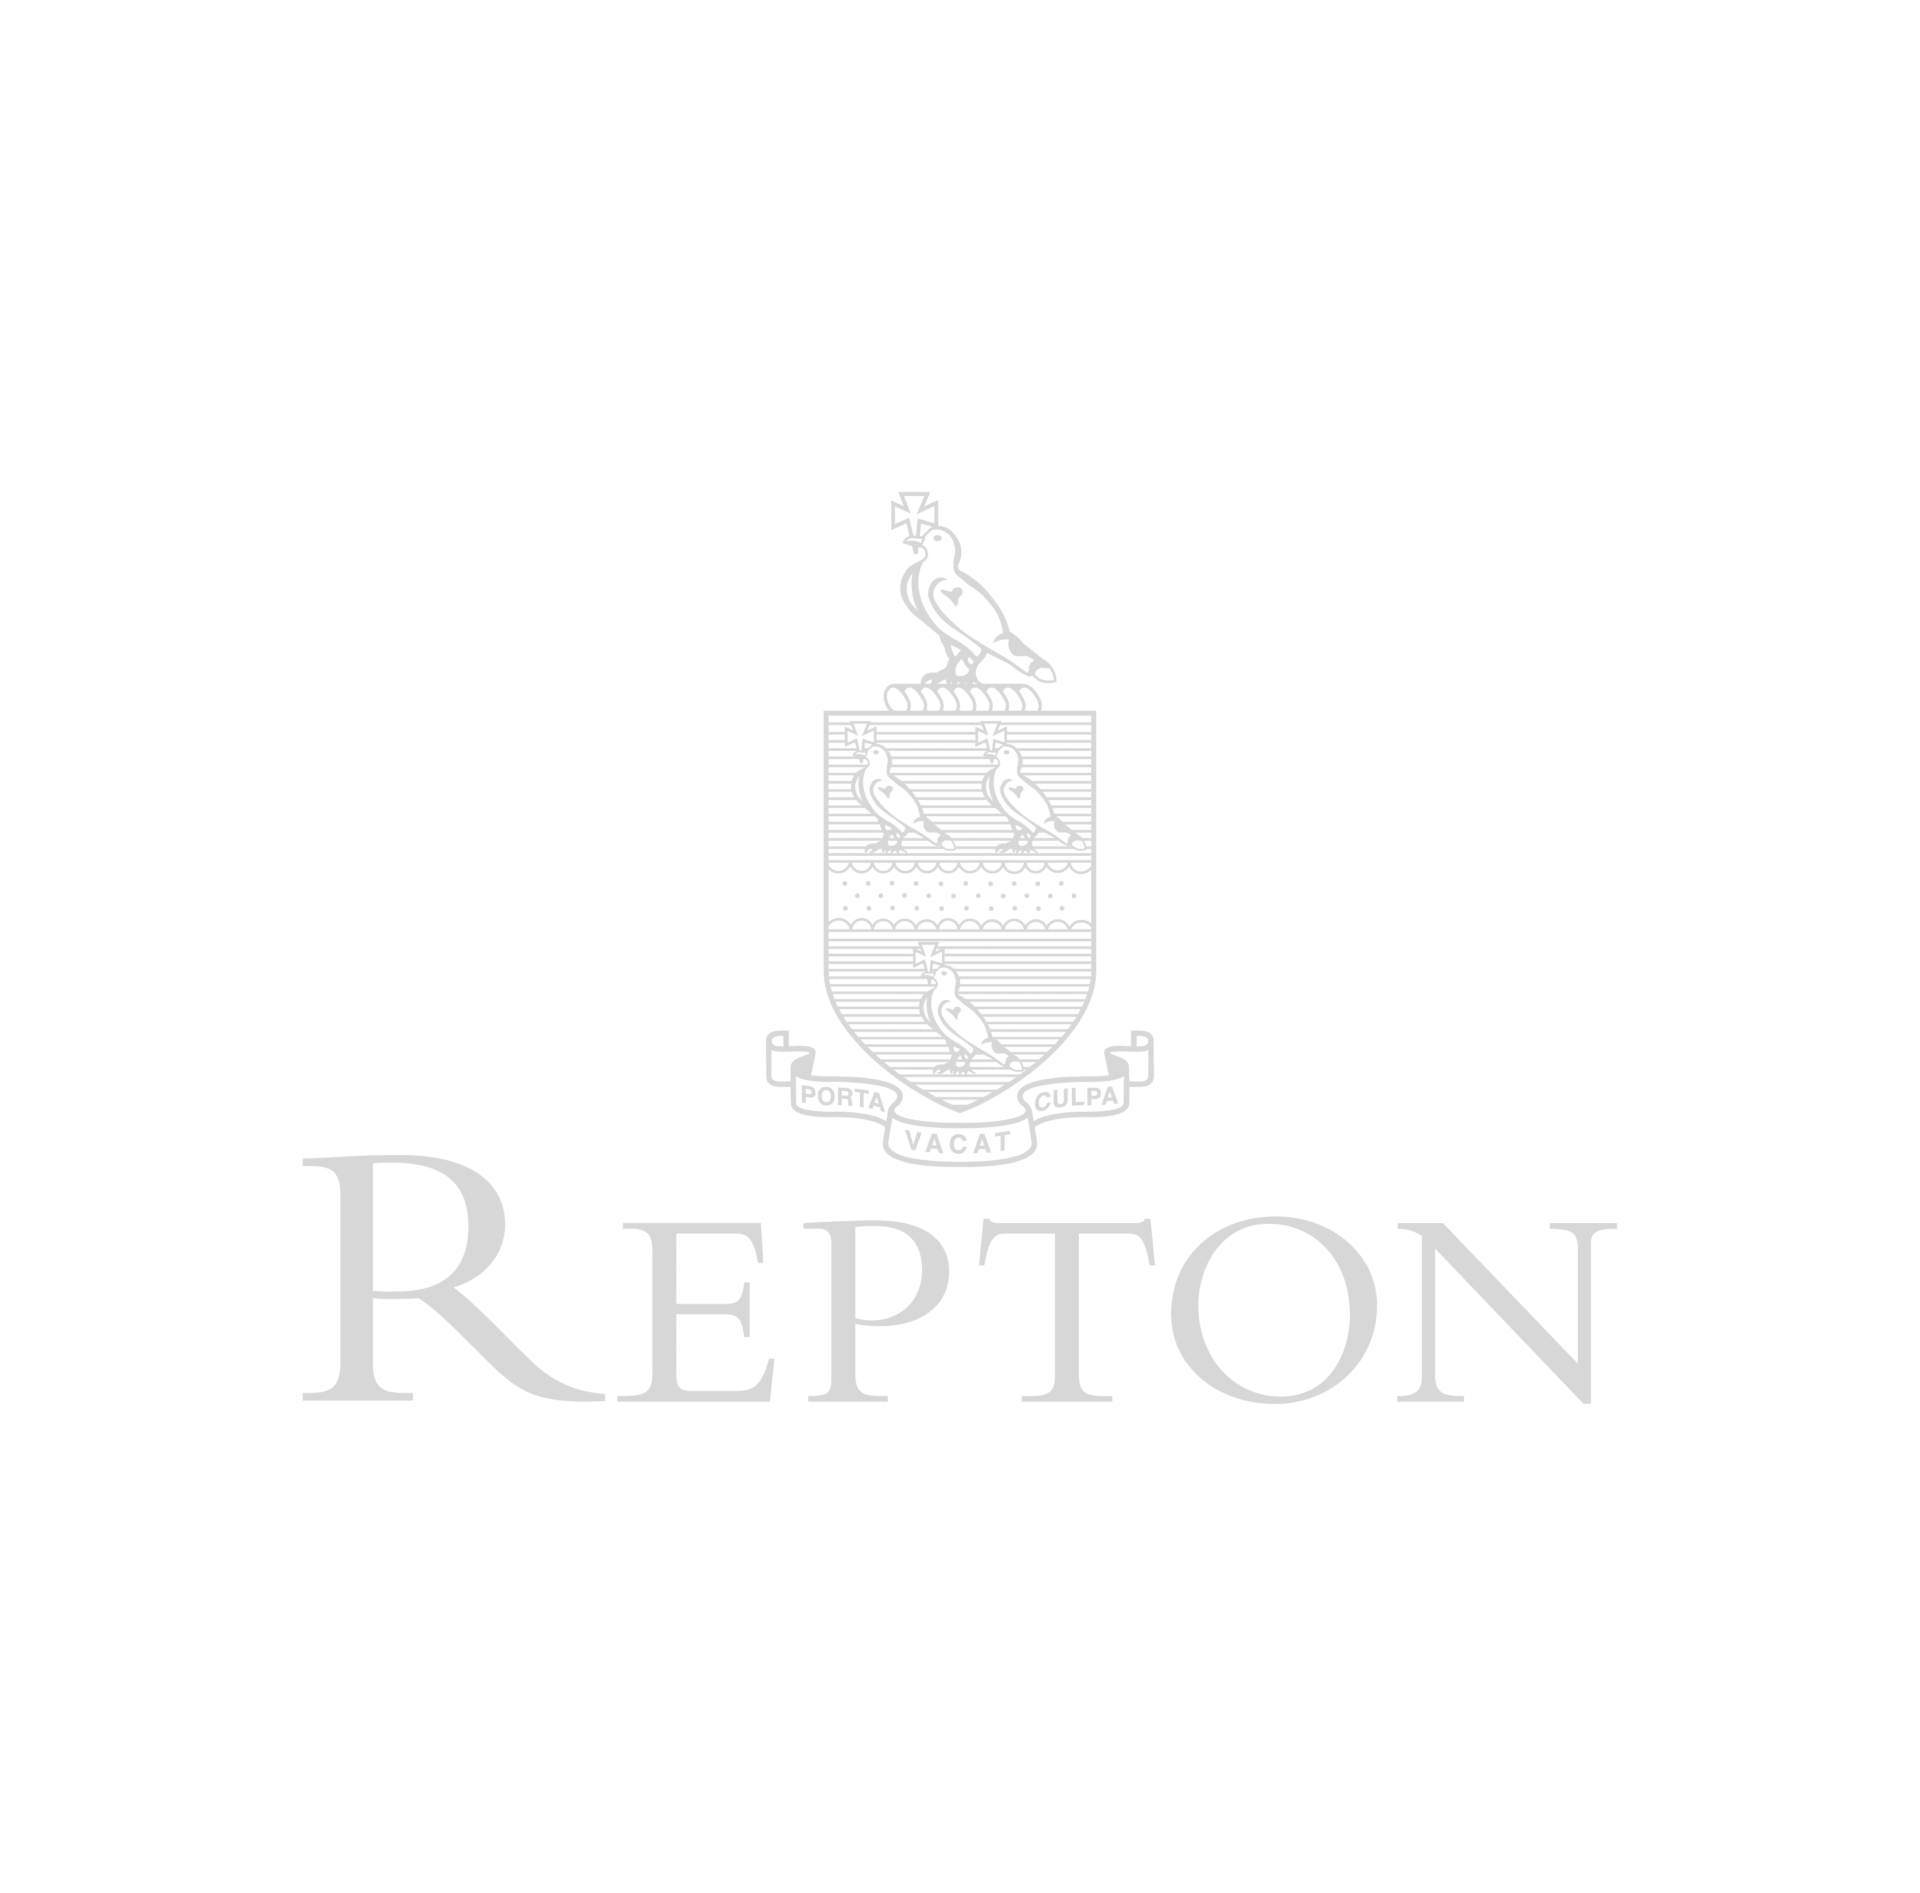 Repton-RGB_Repton-Logo-Repton-Blue